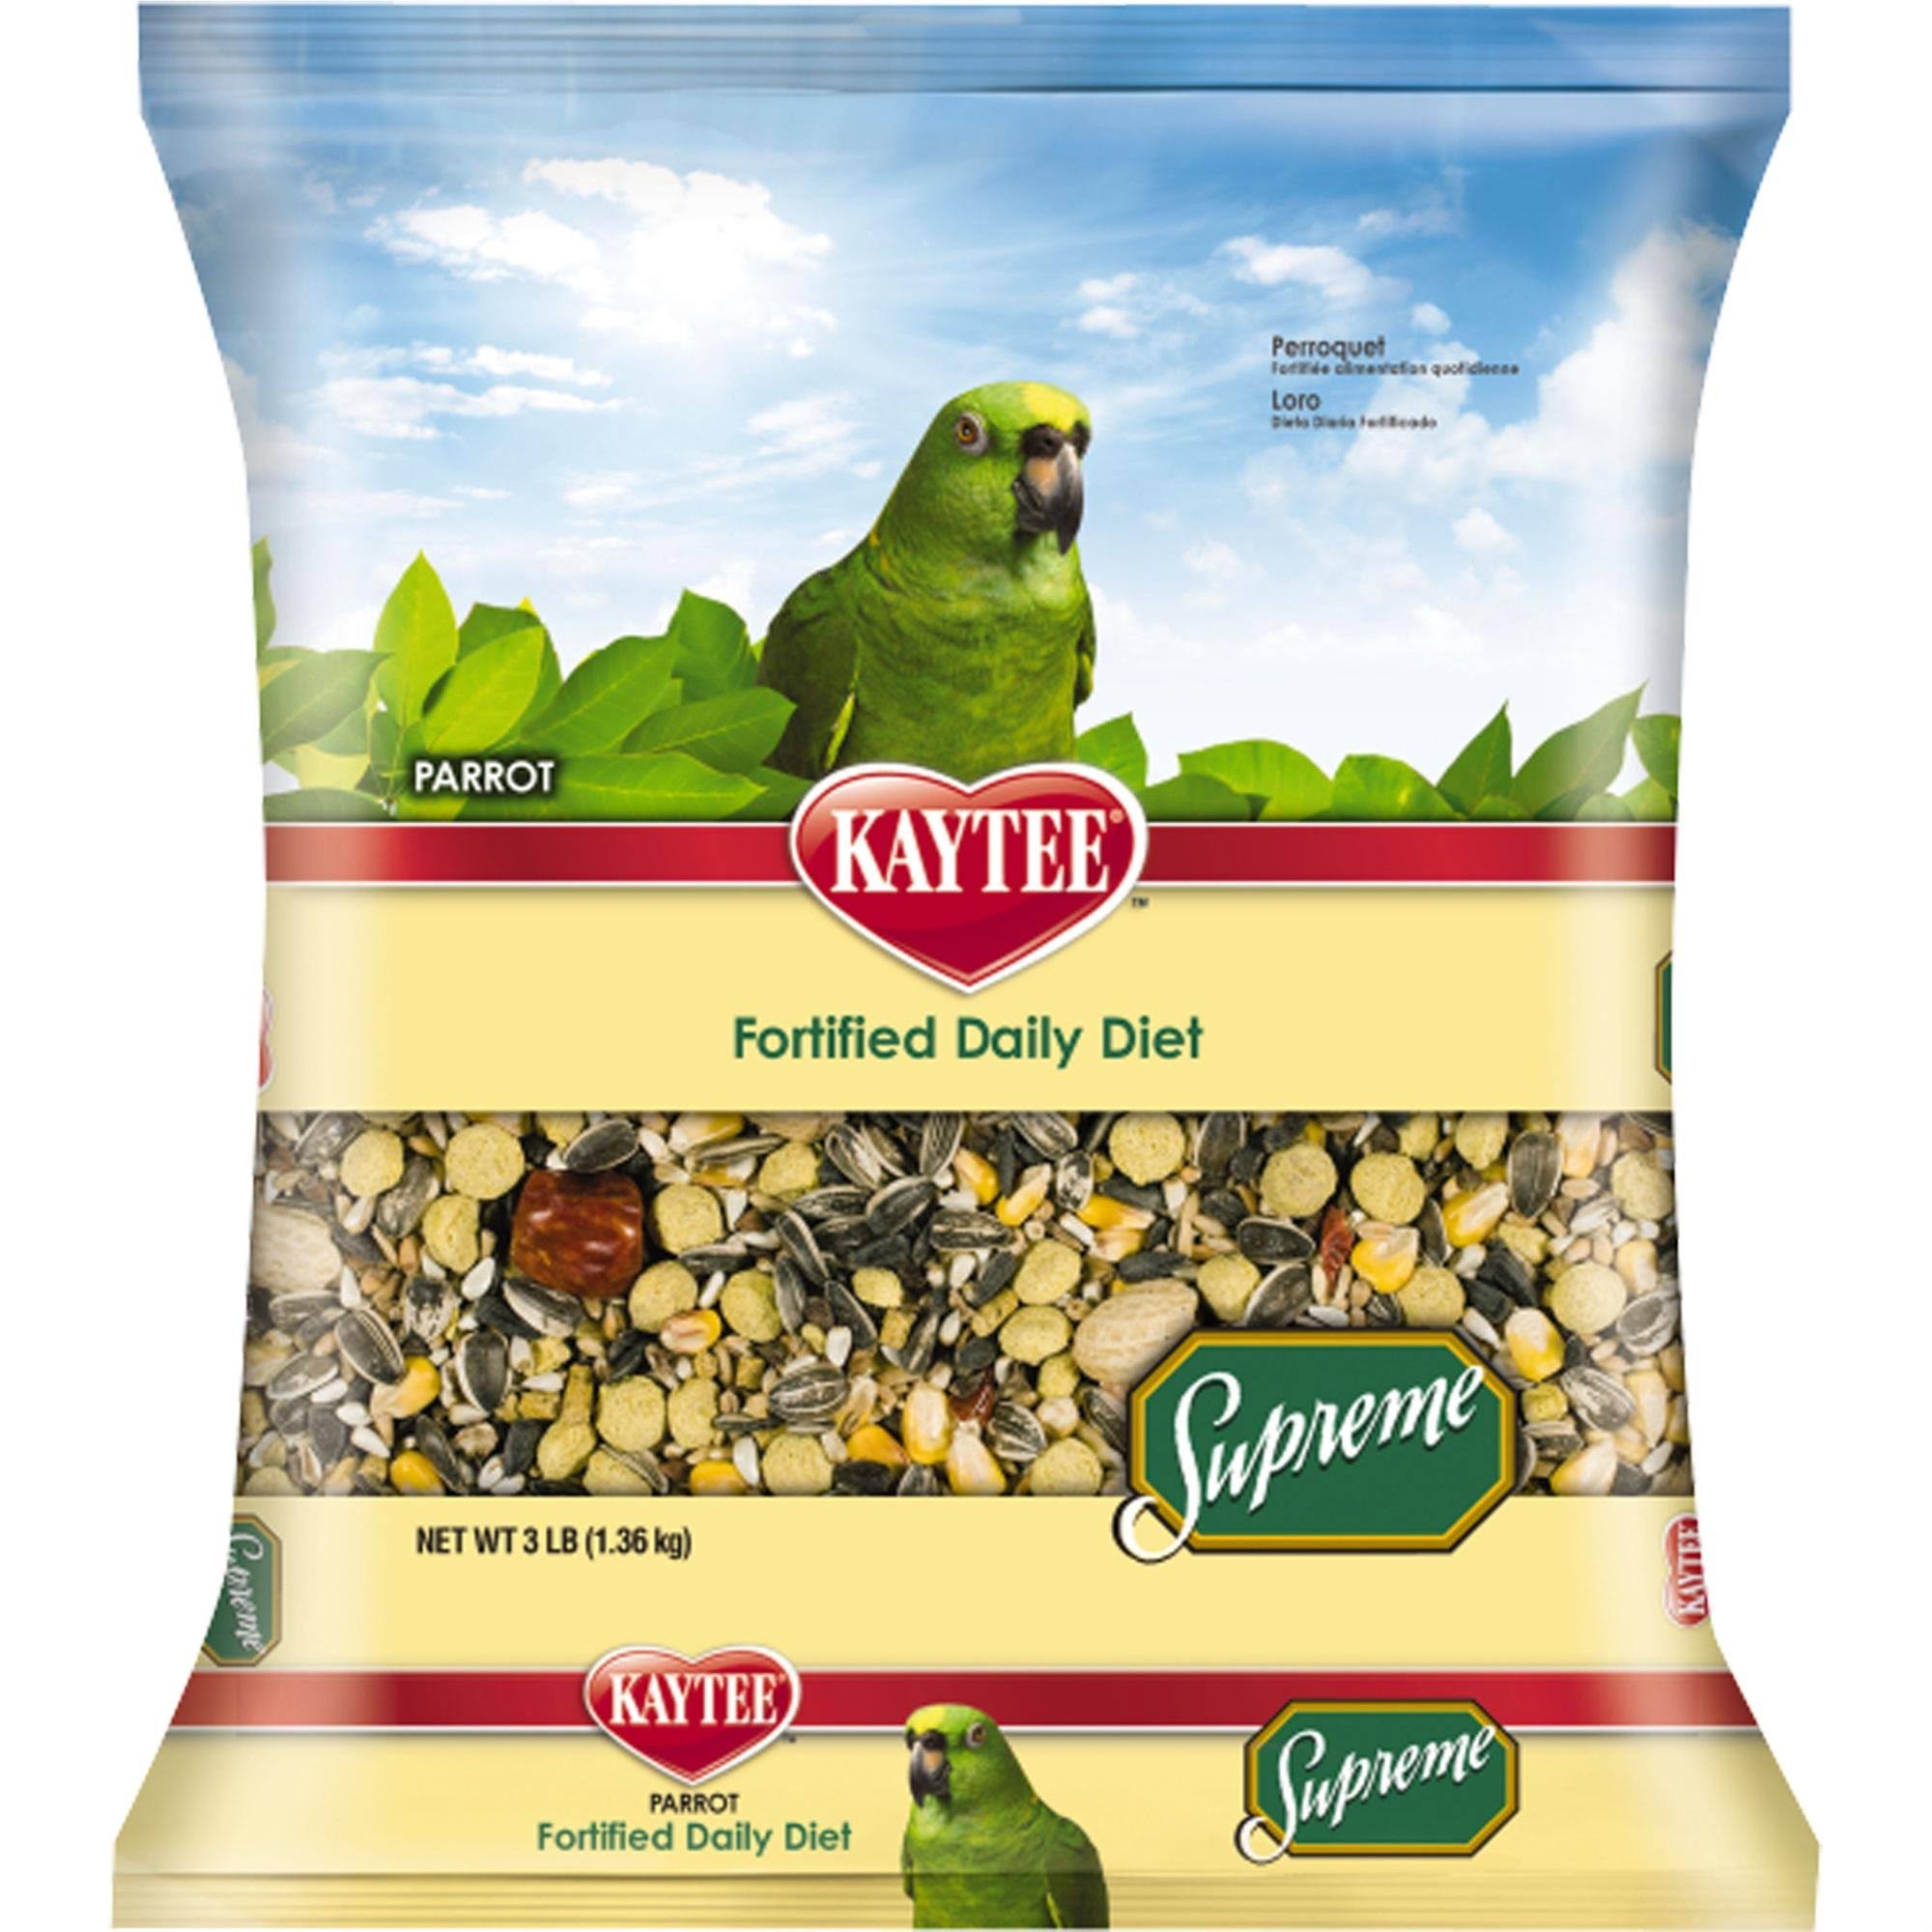 Kaytee Supreme Parrot Food